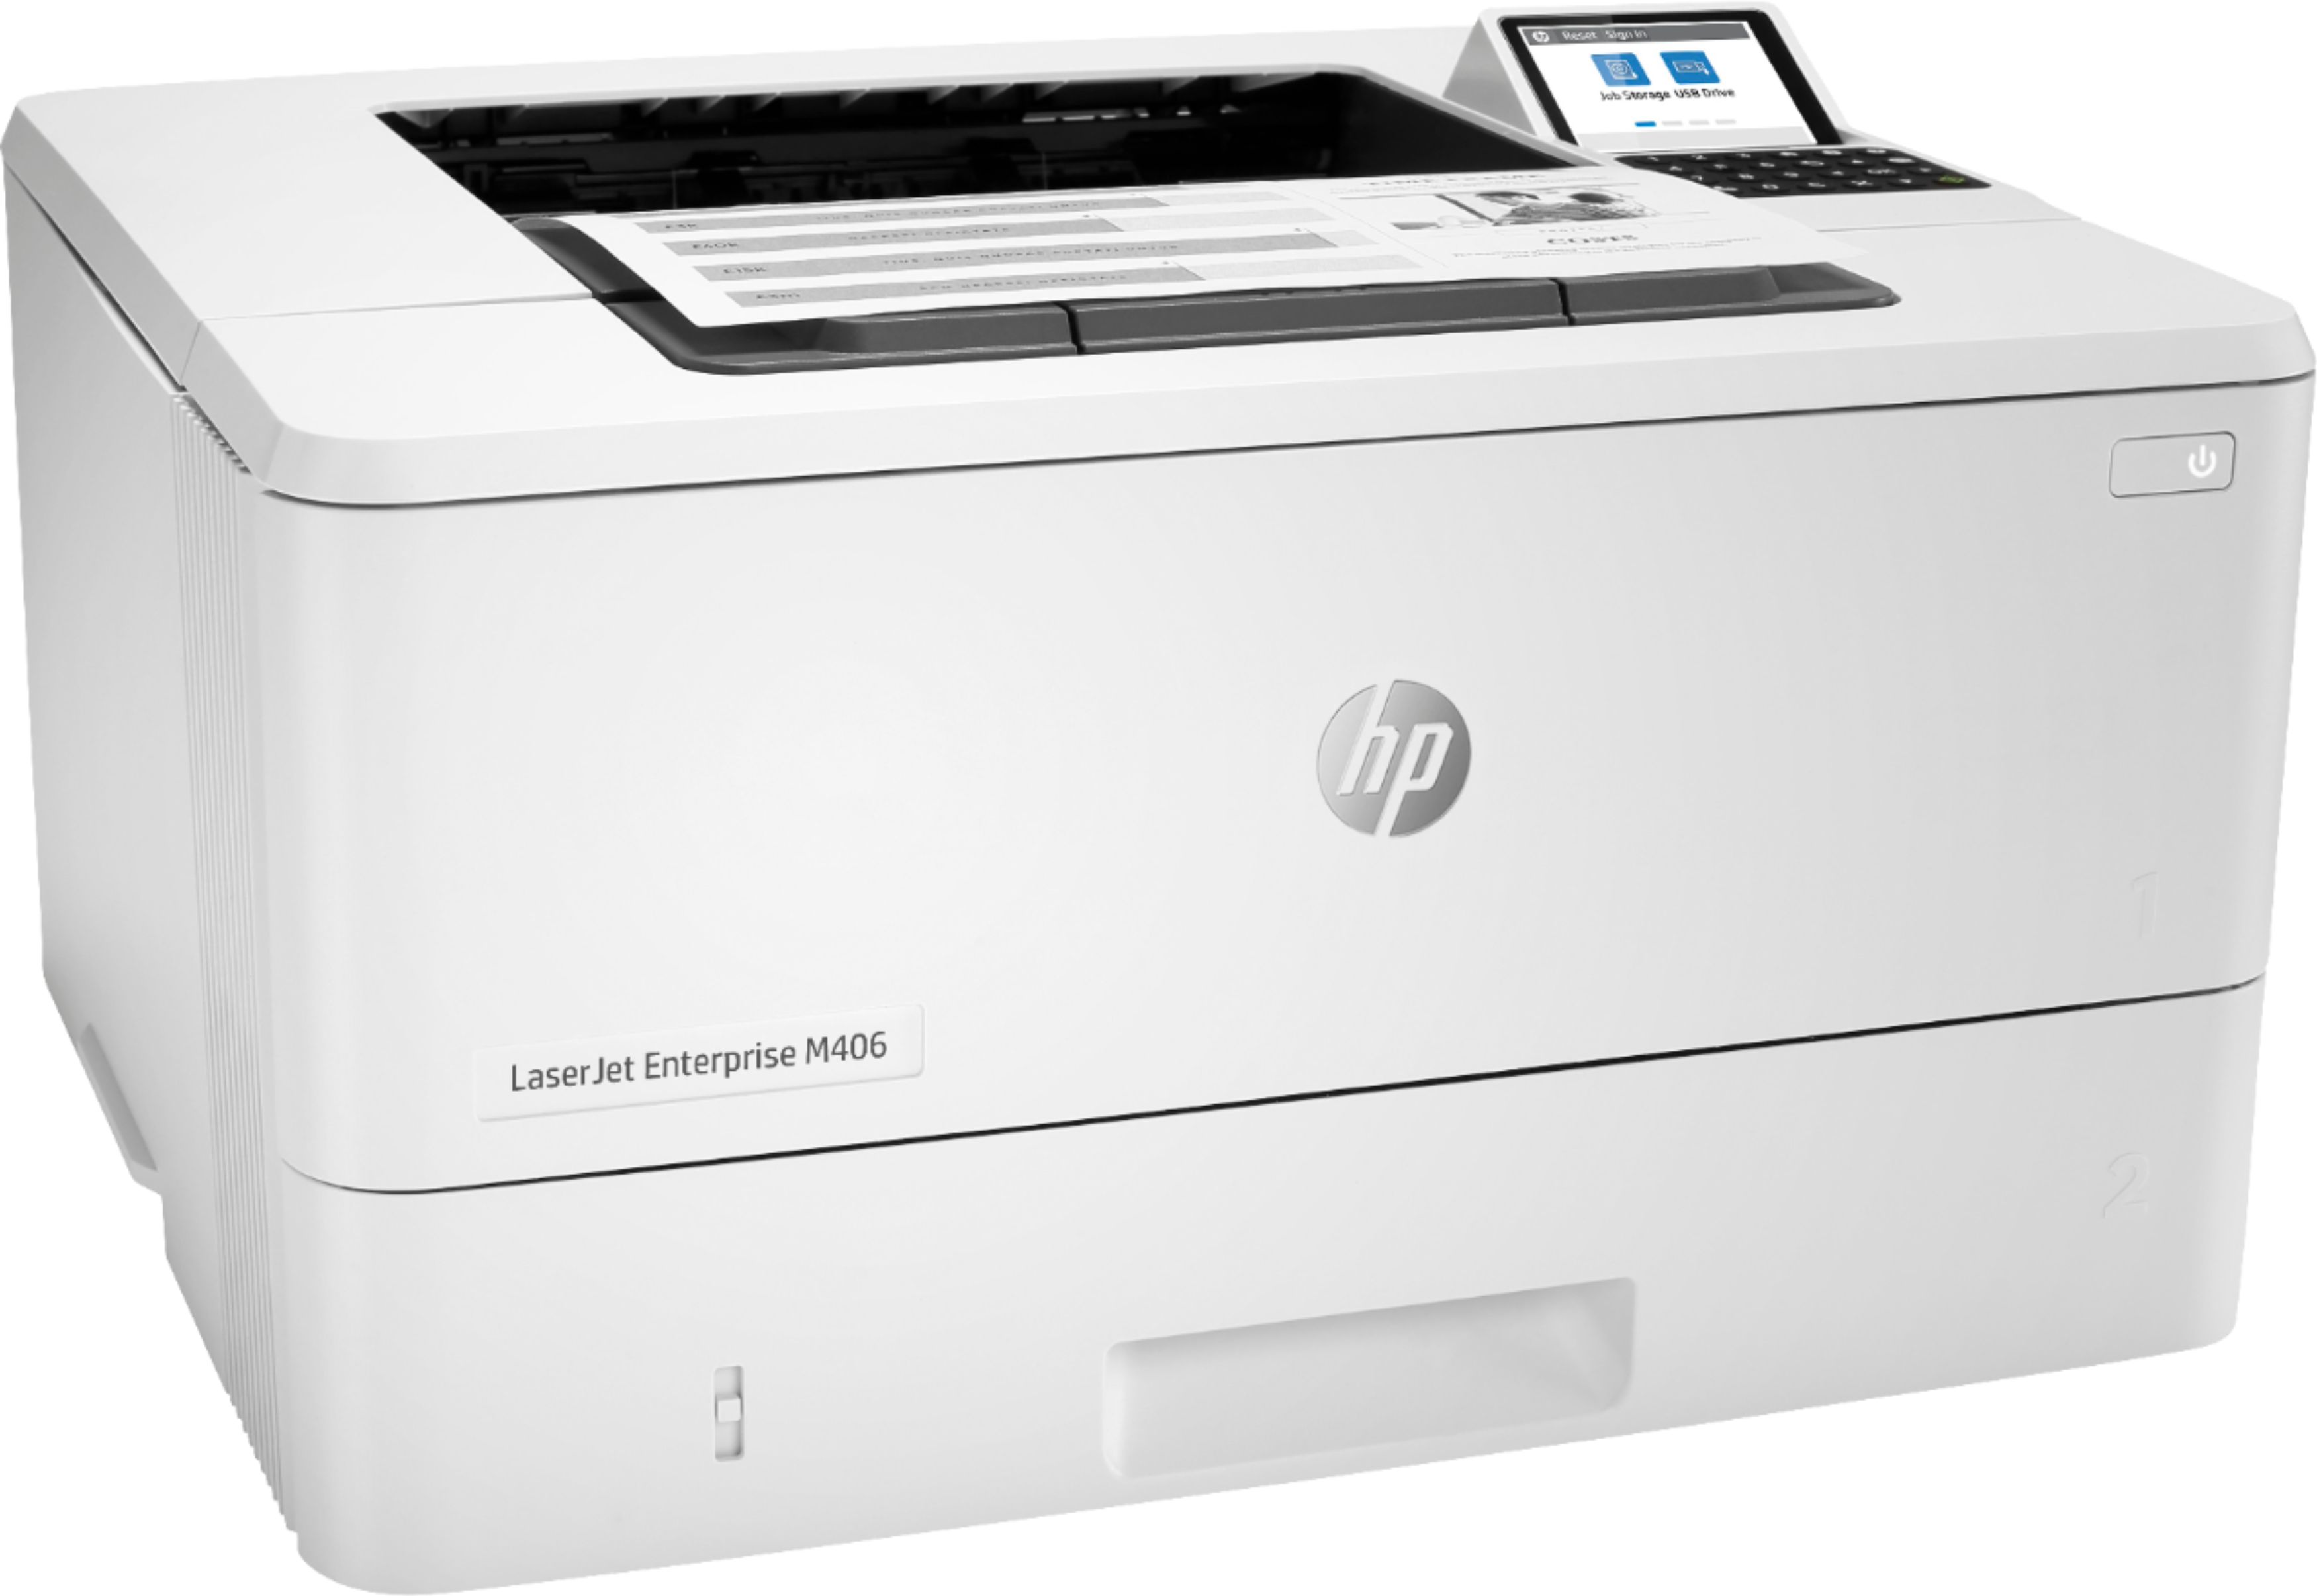 Left View: HP - LaserJet Enterprise M406dn Black-and-White Laser Printer - White